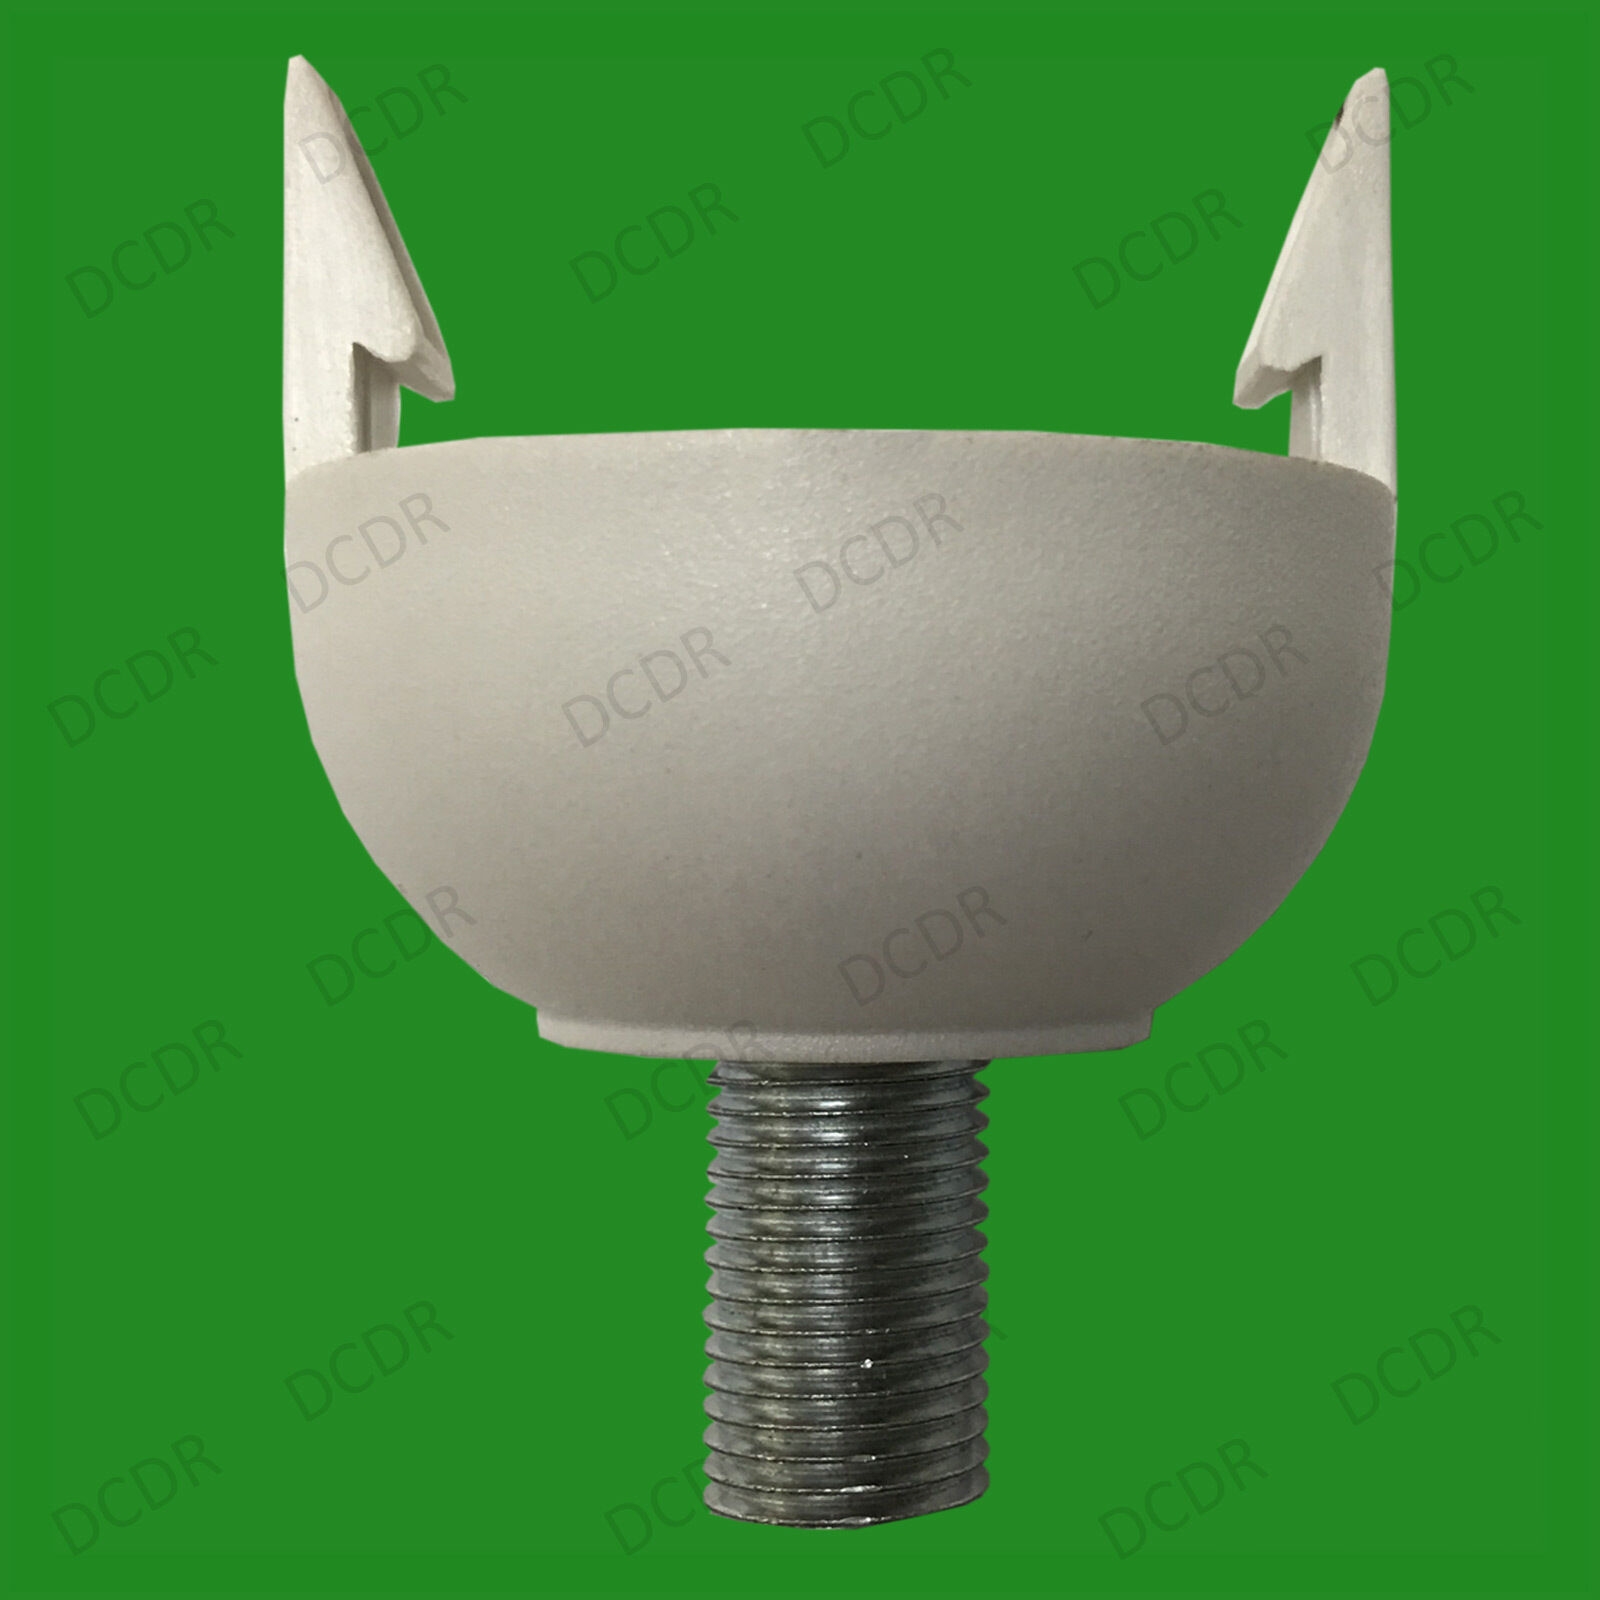 10x M10 20mm x 10mm Allthread Hollow Threaded Rod Tube Electrical Lamp Socket 